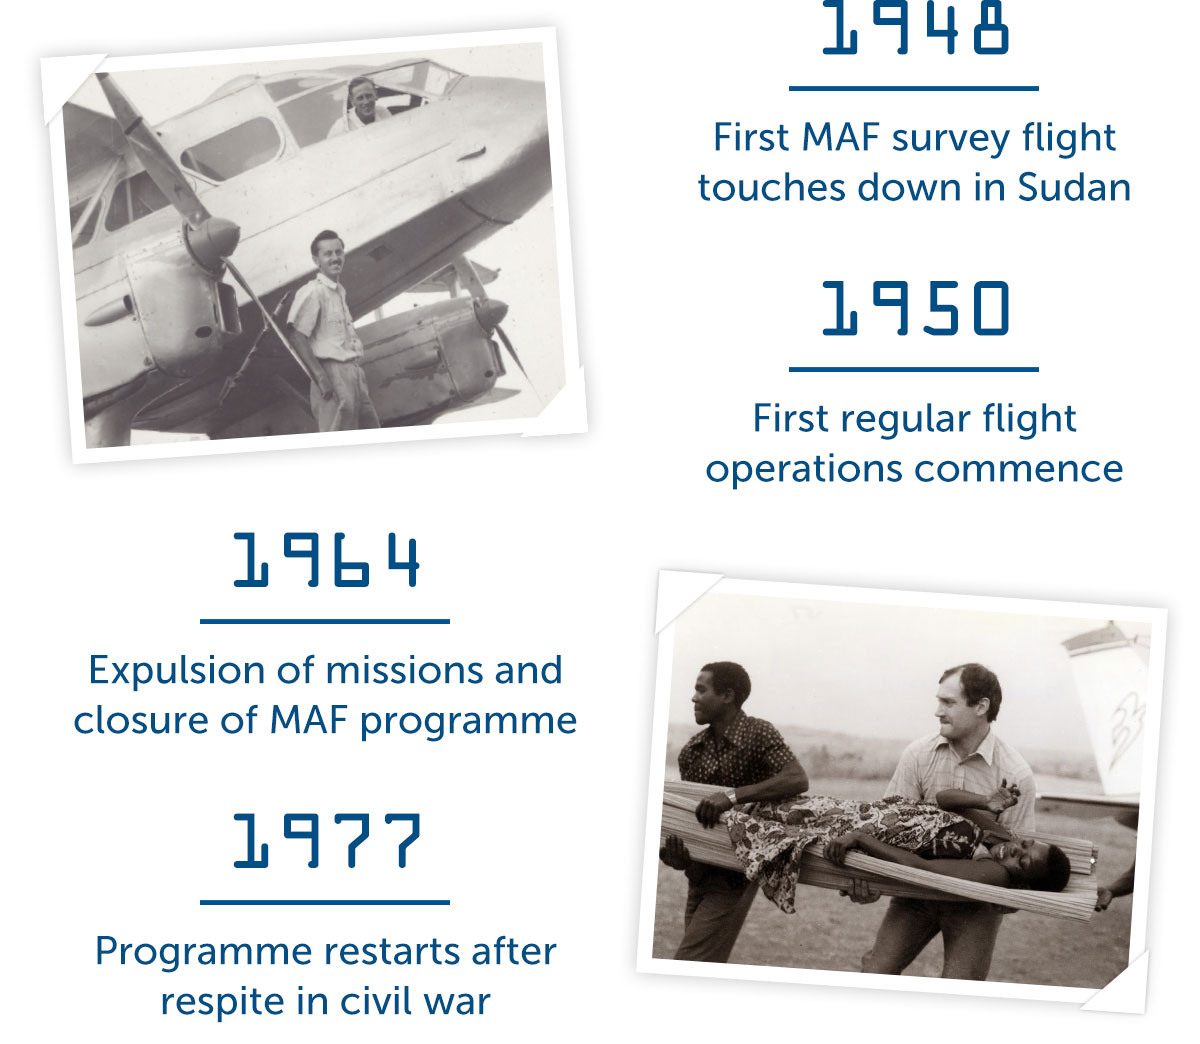 MAF's history in South Sudan